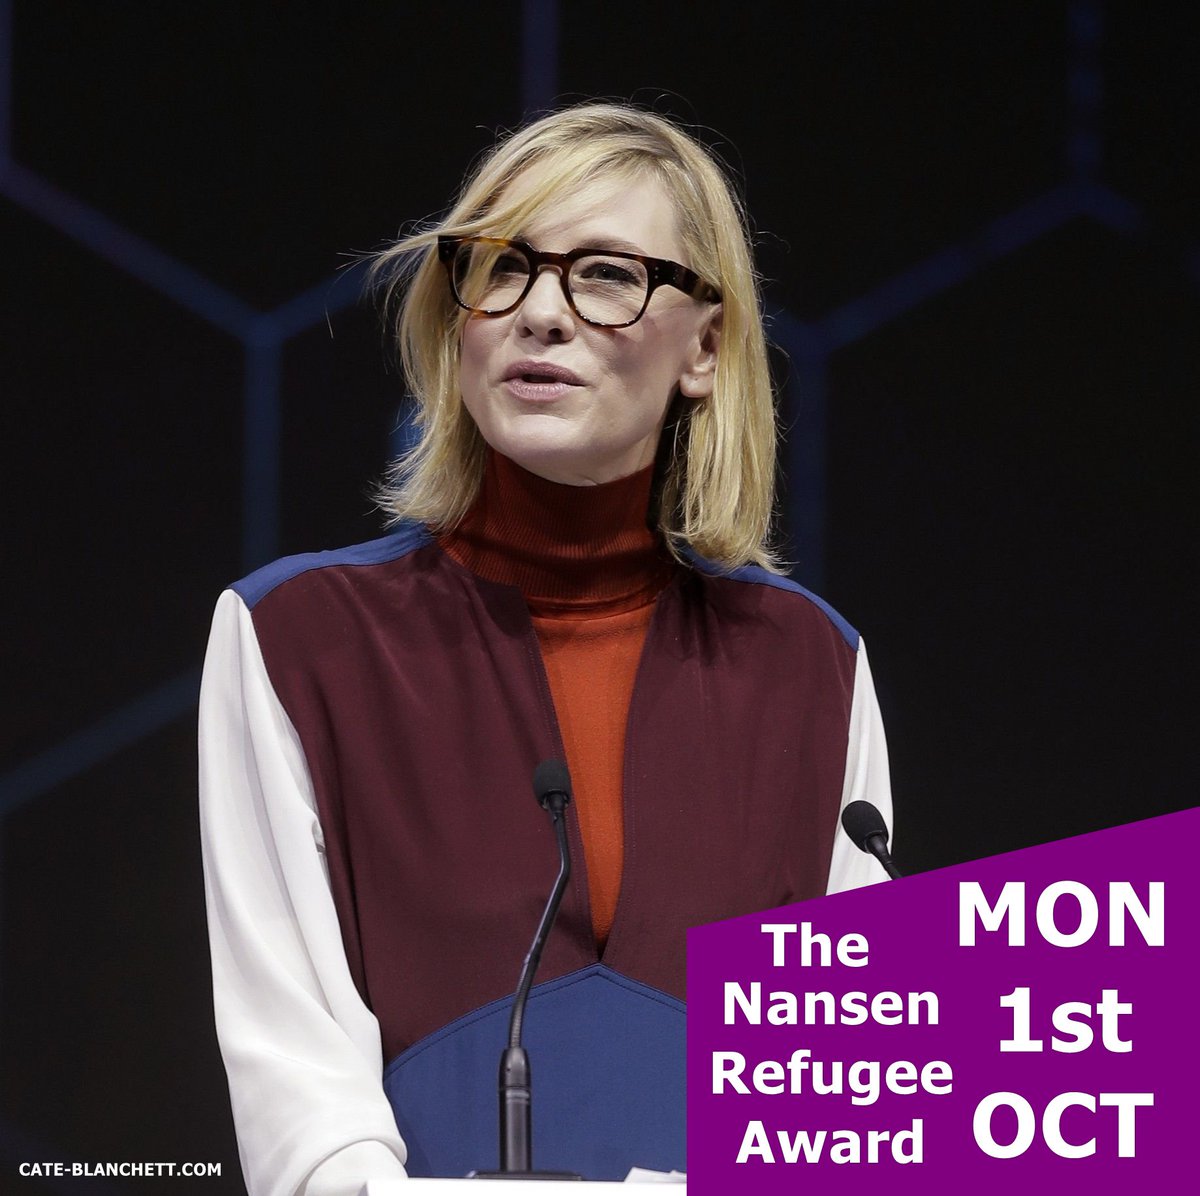 Cate Blanchett to deliver the keynote address at the UNHCR Nansen Refugee Award ceremony
-----
Read More: cate-blanchett.com/2018/09/25/cat…
-----
#GoodwillAmbassador #CateBlanchett #UNHCR #NansenAward #Geneva